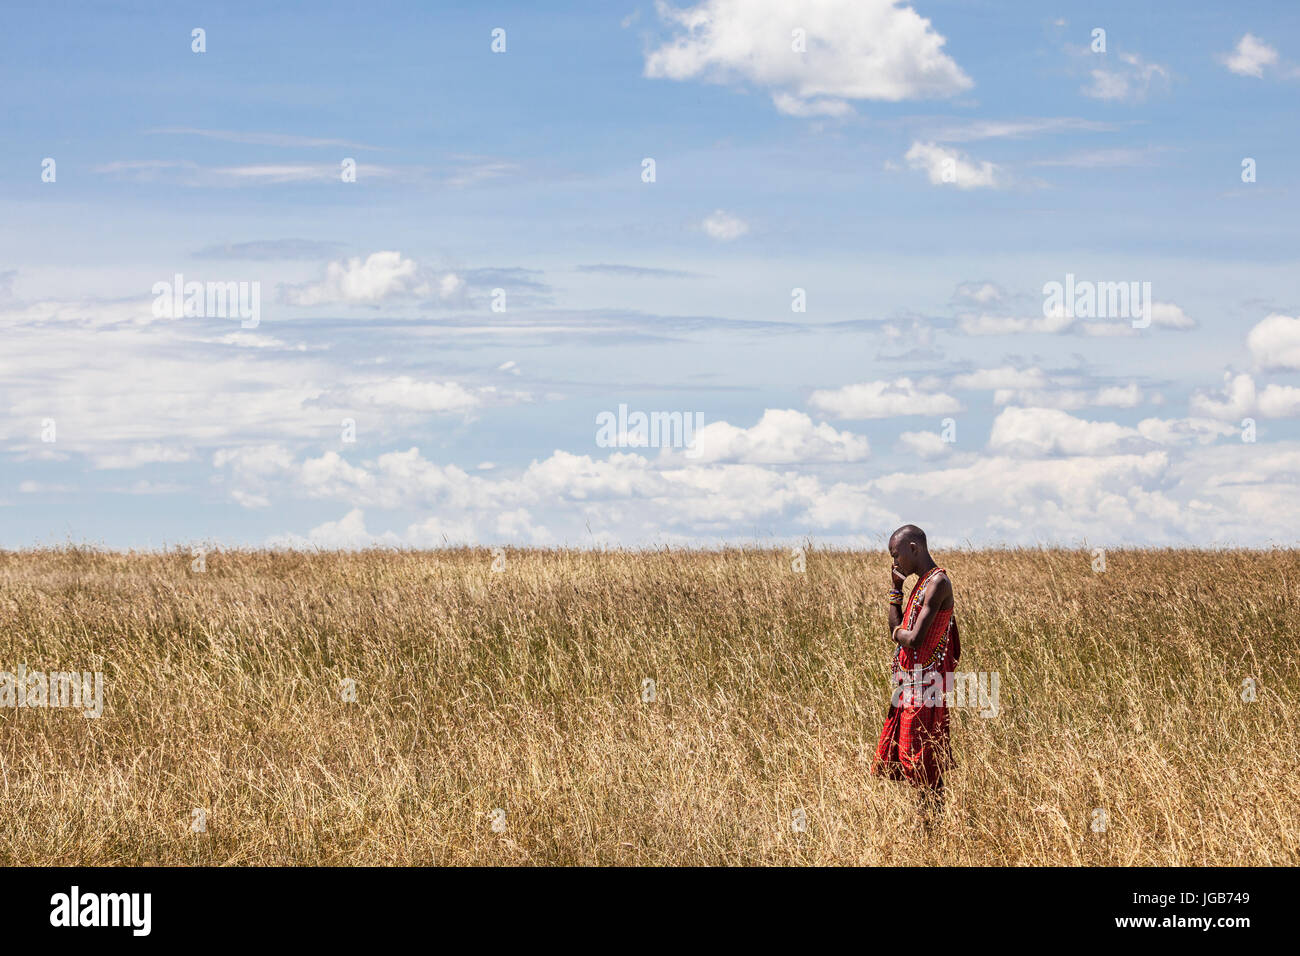 Masai warrior speaking on the phone in the savannah, Masai Mara, Kenya. Stock Photo